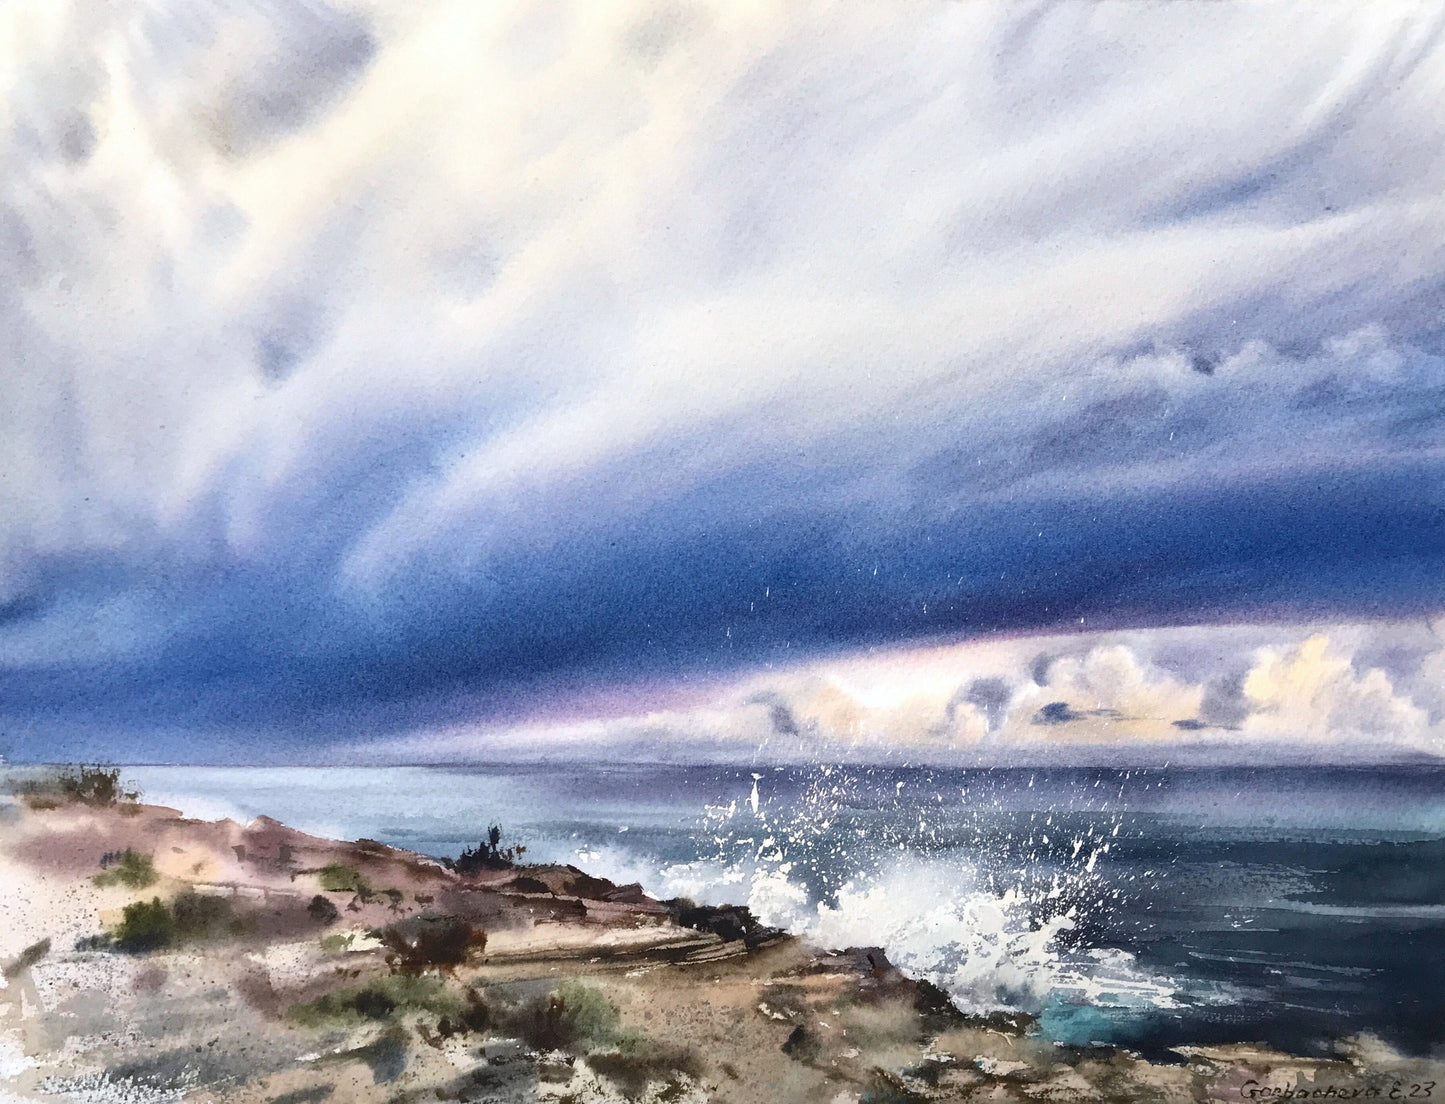 Storm Clouds Painting Original, Coastal Watercolor Artwork, Sea Waves, Seaside Wall Art, Seascape Home Wall Decor, Gift